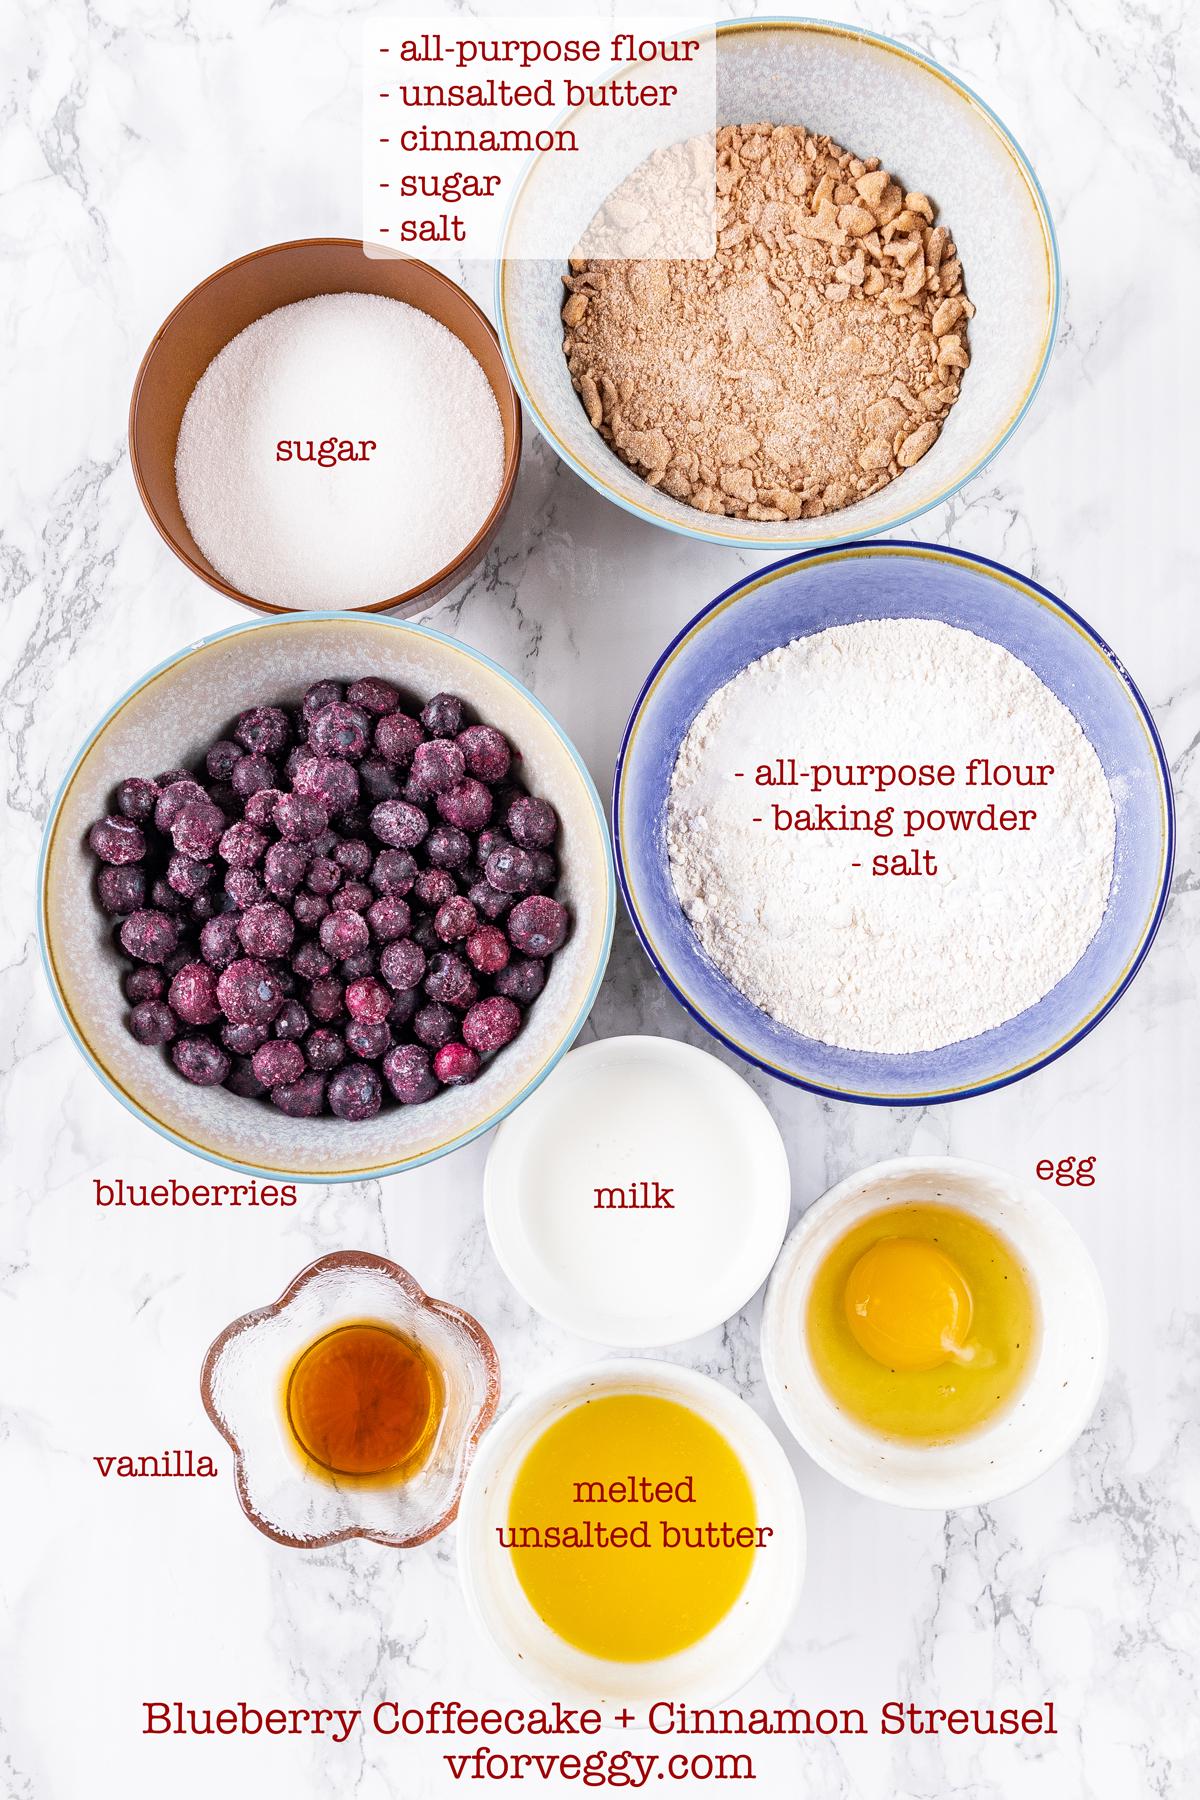 Ingredients for blueberry coffeecake with cinnamon streusel: blueberries, all-purpose flour, baking powder, unsalted butter, milk, vanilla, cinnamon, sugar, ad salt.